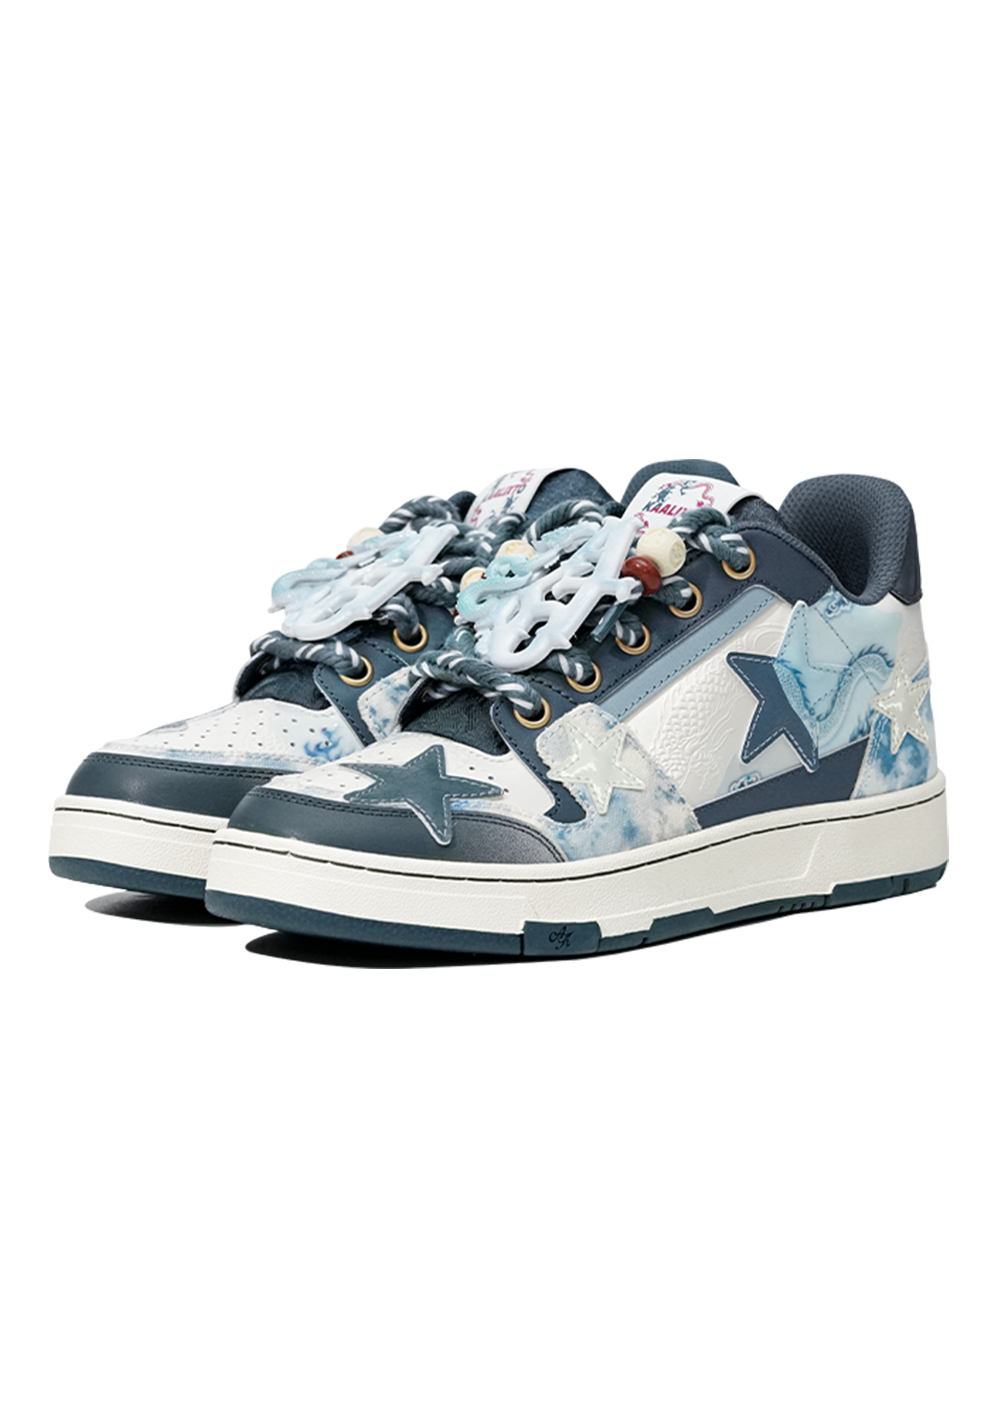 Retro Star Sneakers-Blue And White Porcelain - PSYLOS 1, Retro Star Sneakers-Blue And White Porcelain, Shoes, KAALIXTO, PSYLOS 1